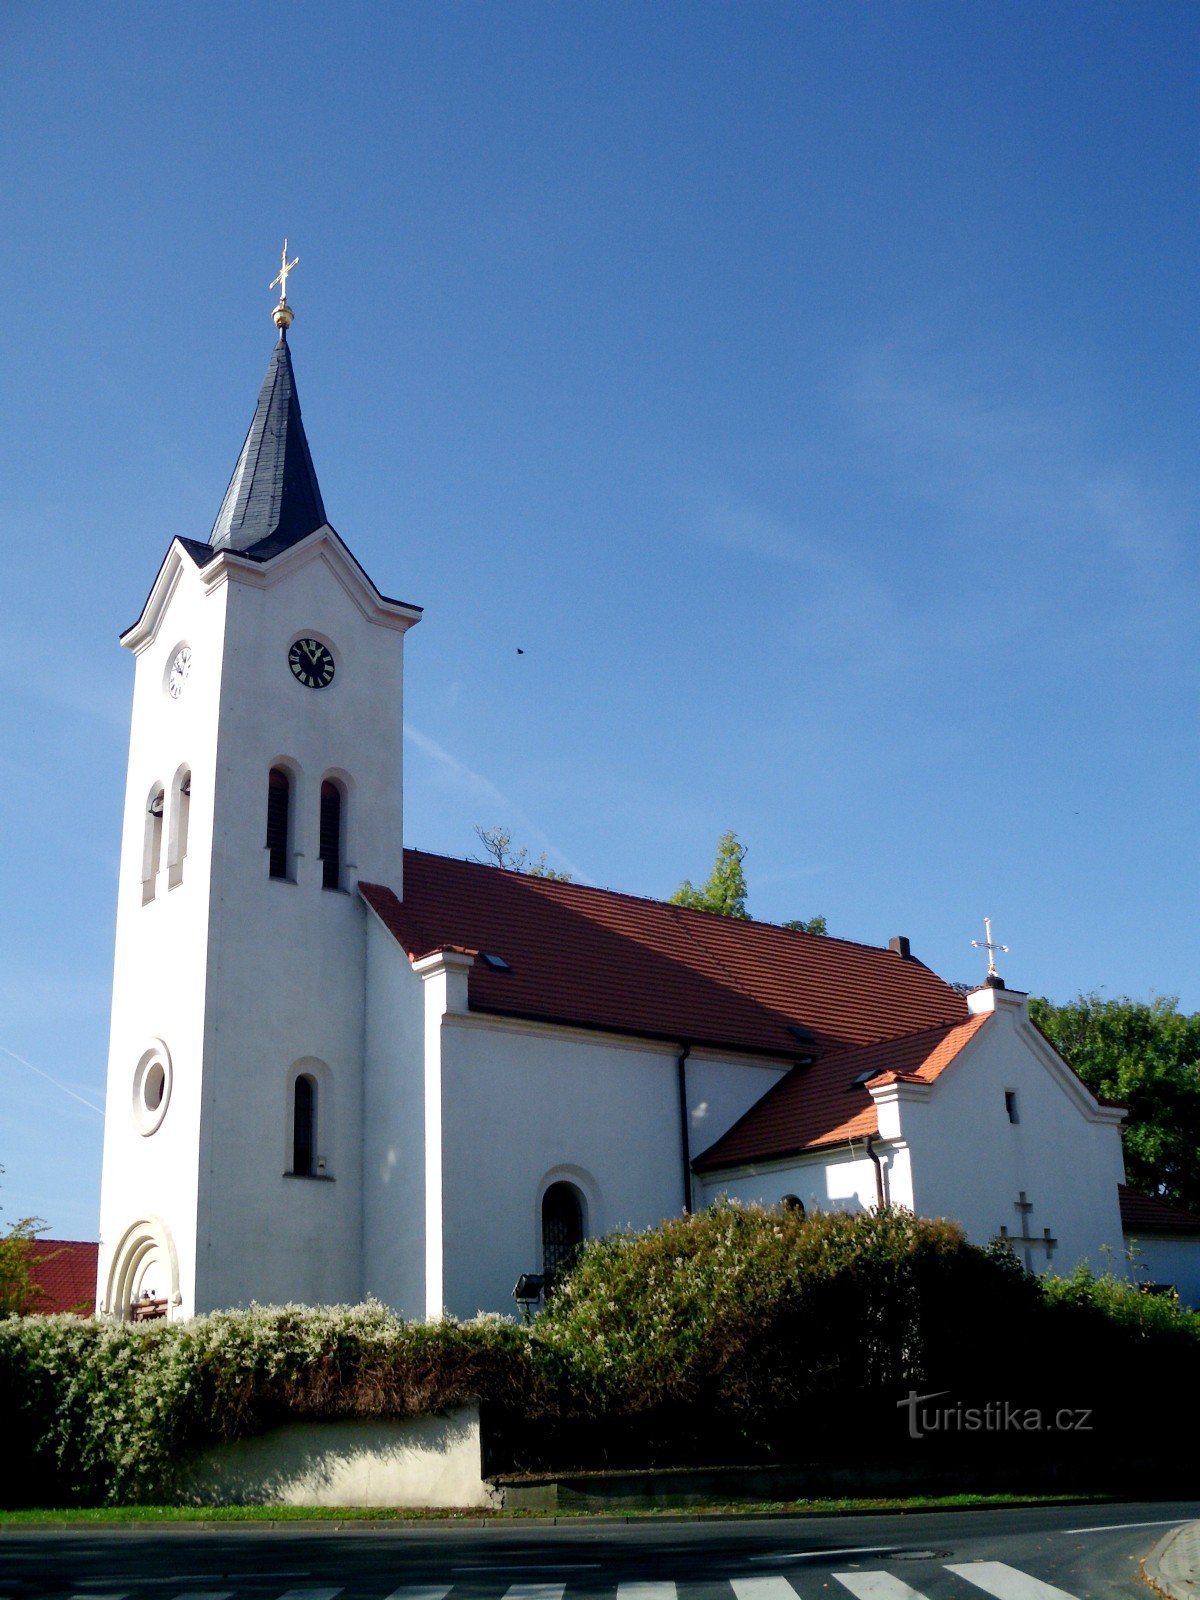 Čestlice - nhà thờ St. Procopius